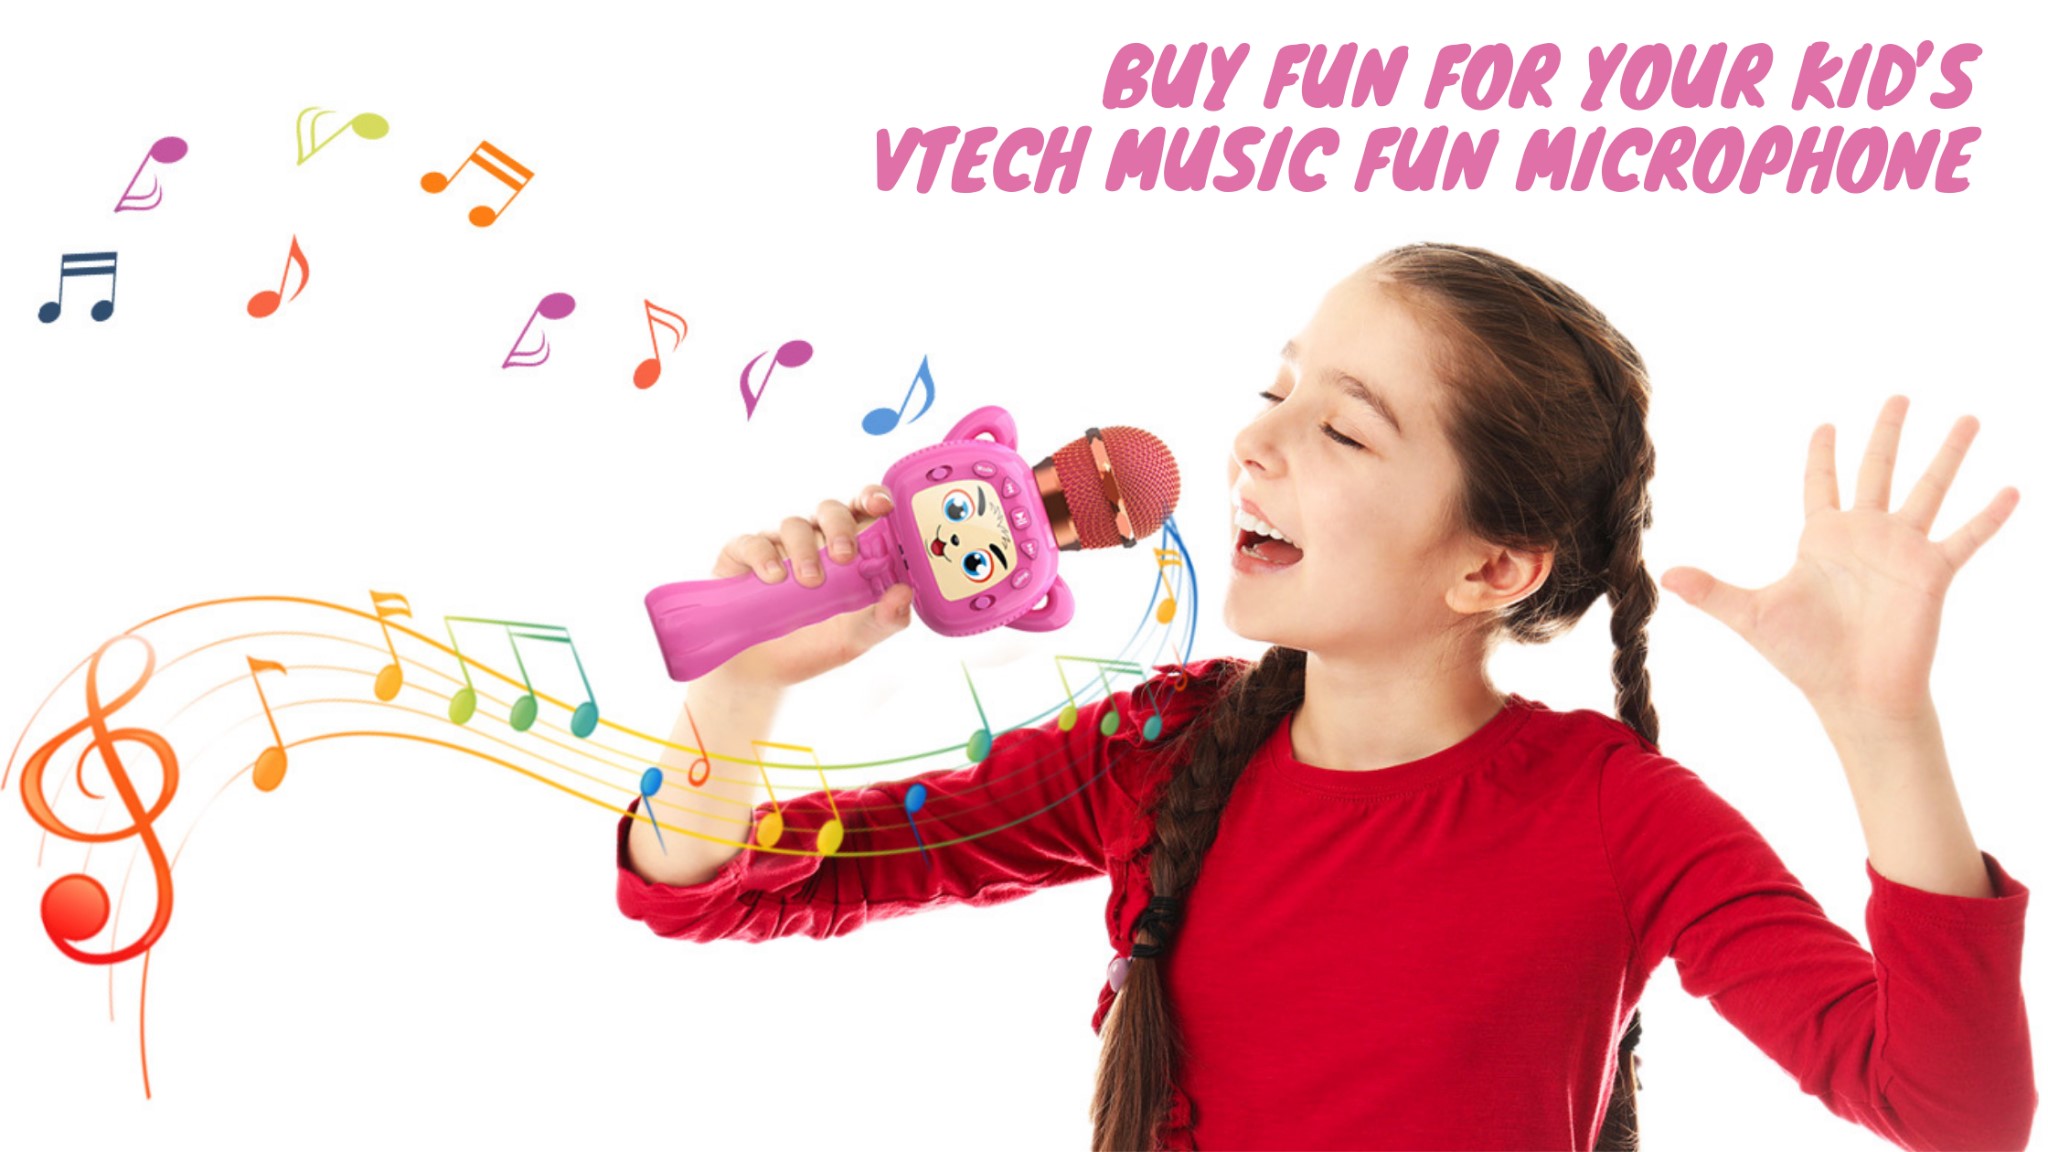 buy fun for your kids vetch music fun microphone